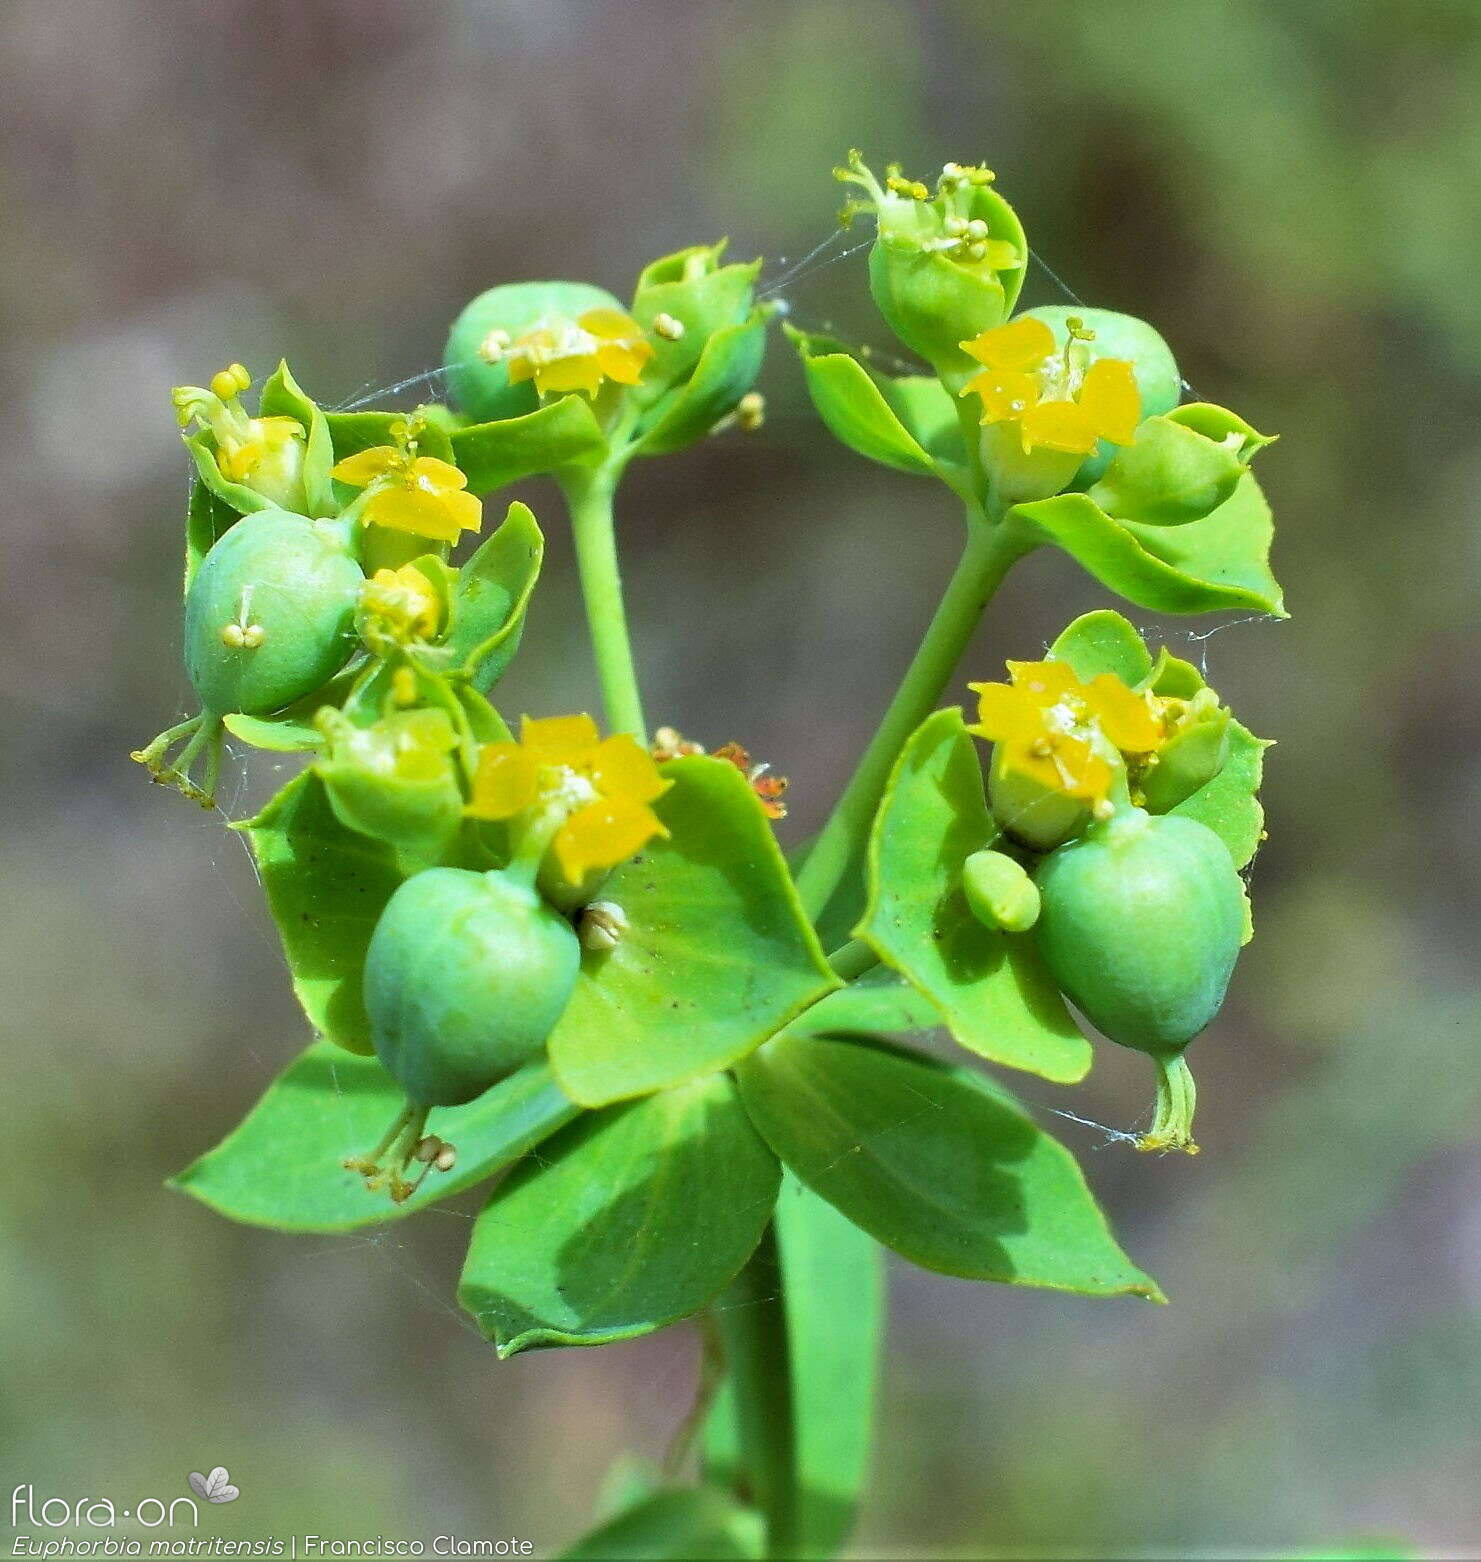 Euphorbia matritensis - Flor (geral) | Francisco Clamote; CC BY-NC 4.0